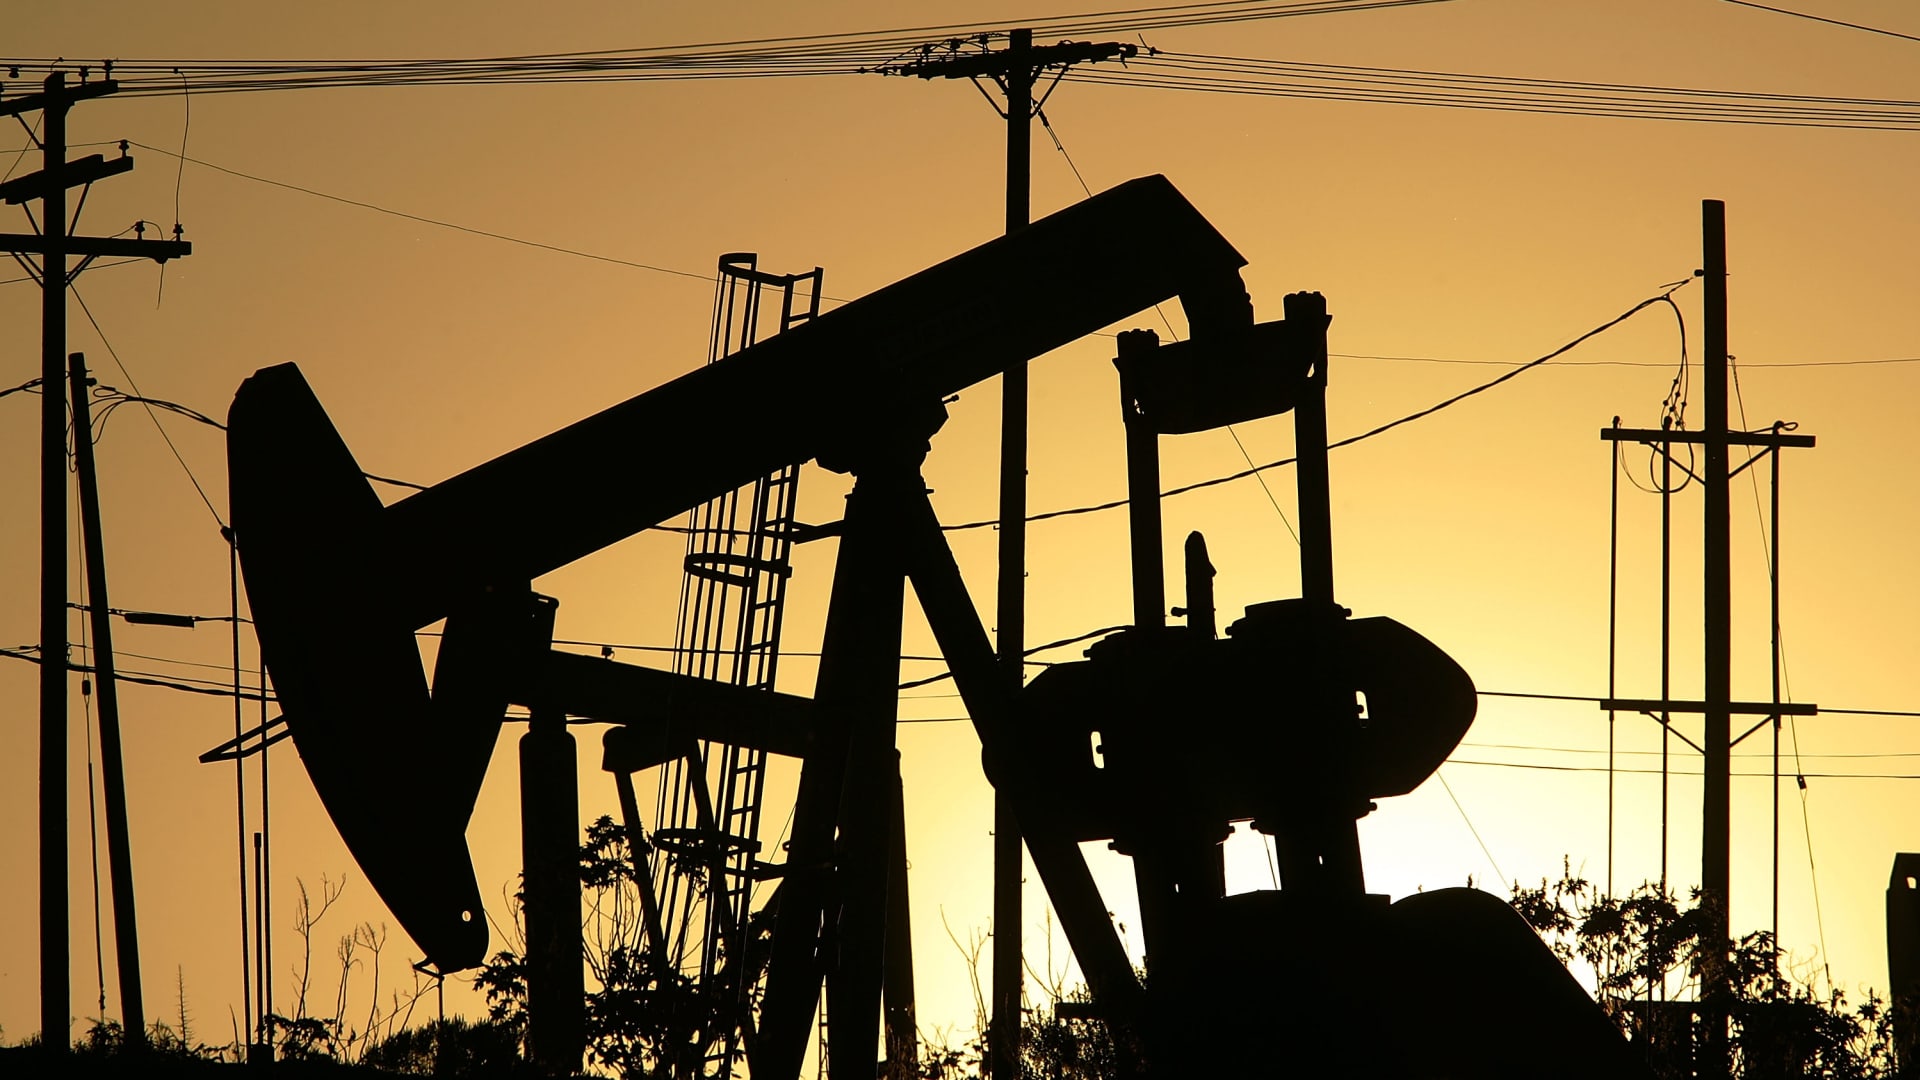 Geopolitics could drive oil prices over $100, Citi says